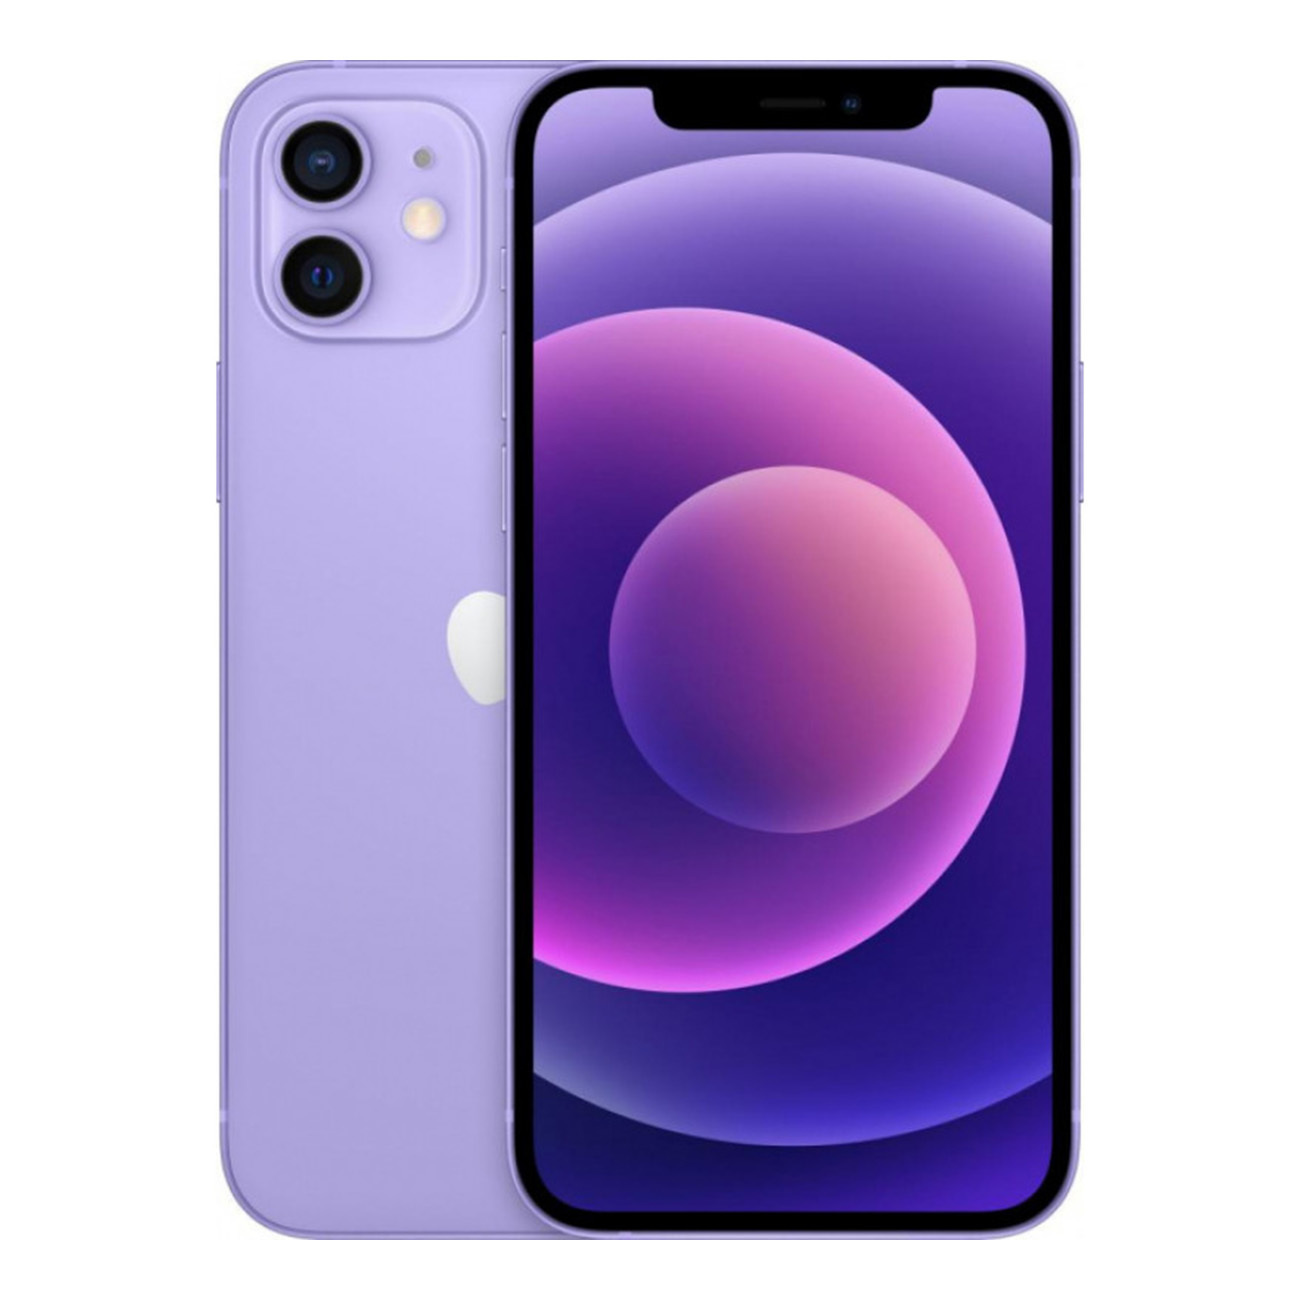 Купите Apple iPhone 12 Mini 256GB Purple недорого, гарантия лучшей цены на  Apple iPhone 12 Mini 256GB Purple в интернет-магазине Интернет-магазин  КупиСмартфон